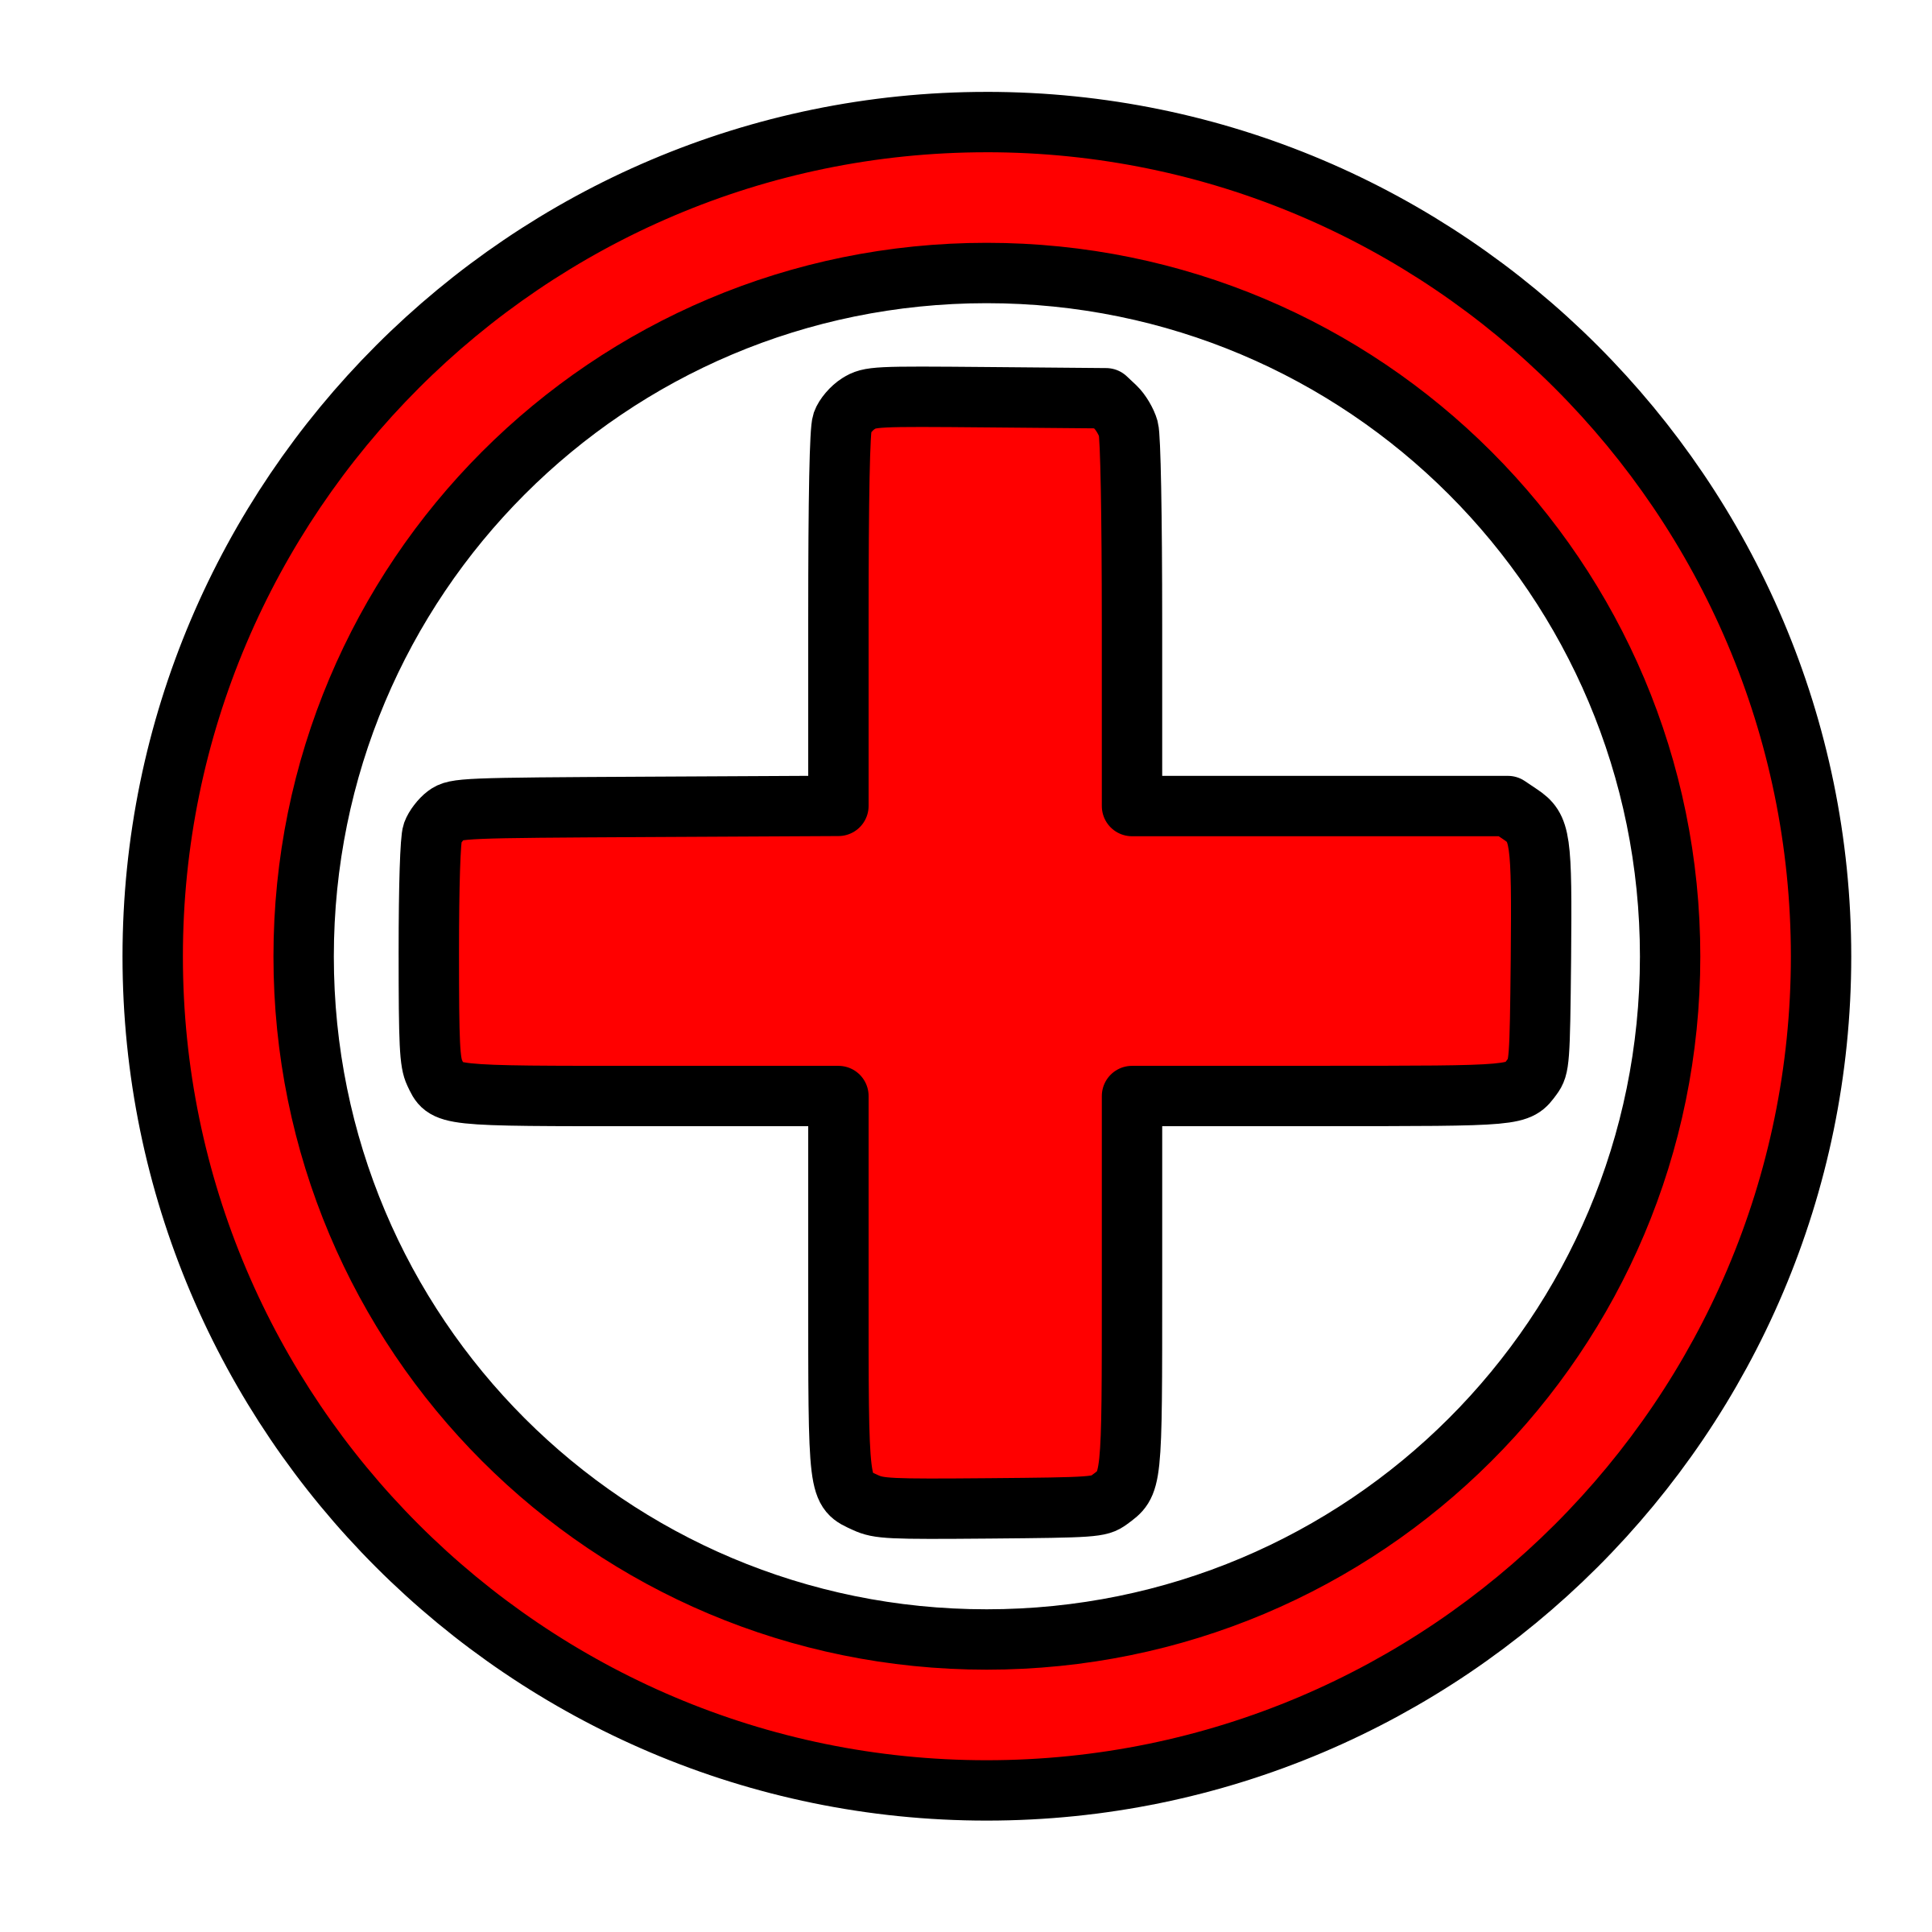 Health symbol